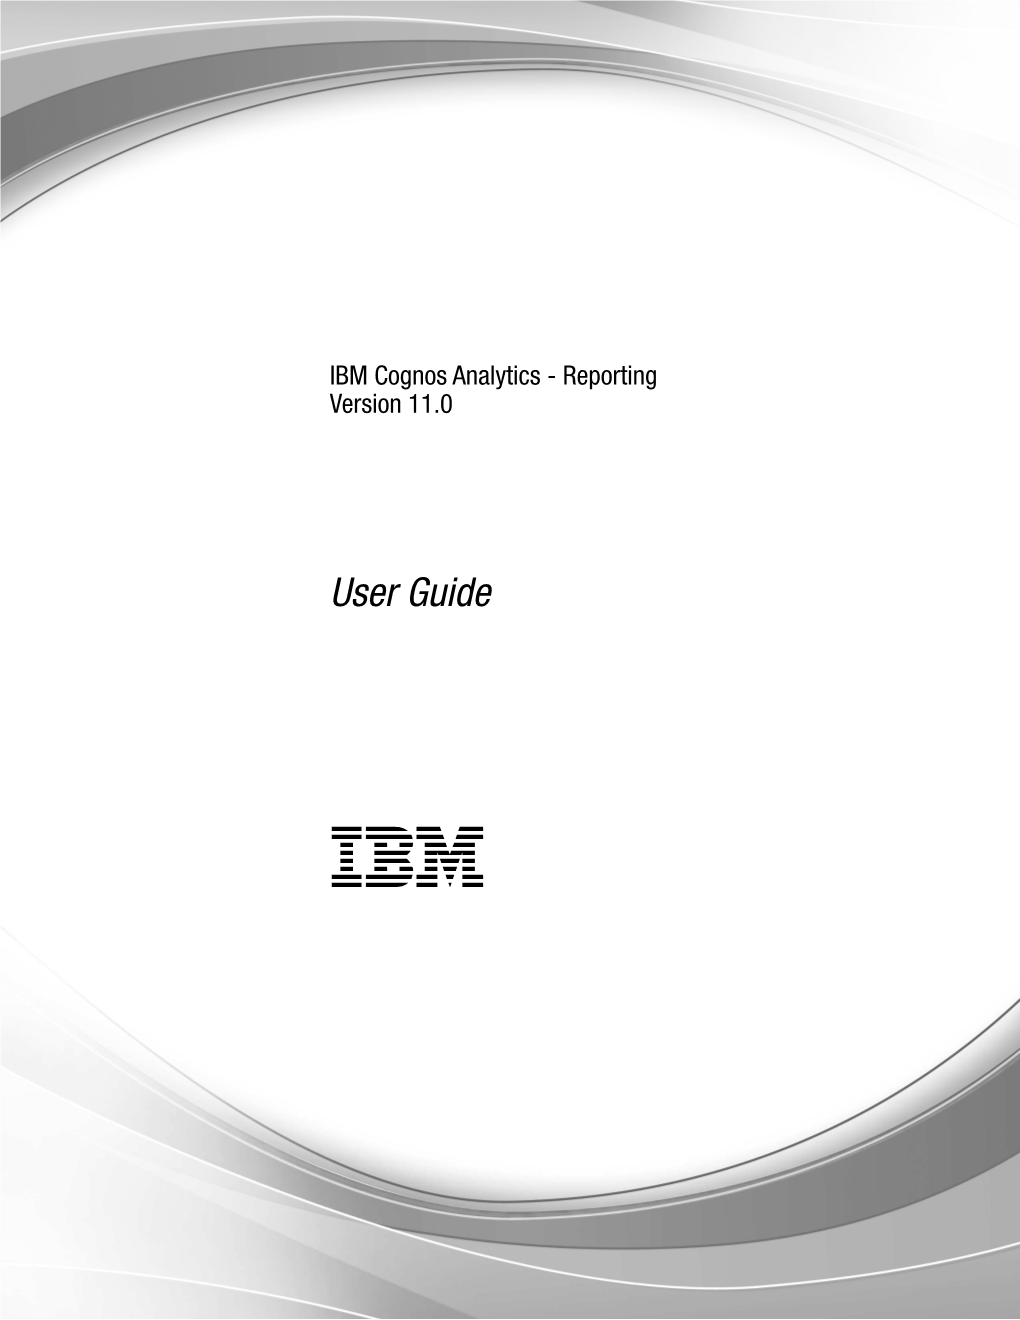 IBM Cognos Analytics - Reporting Version 11.0